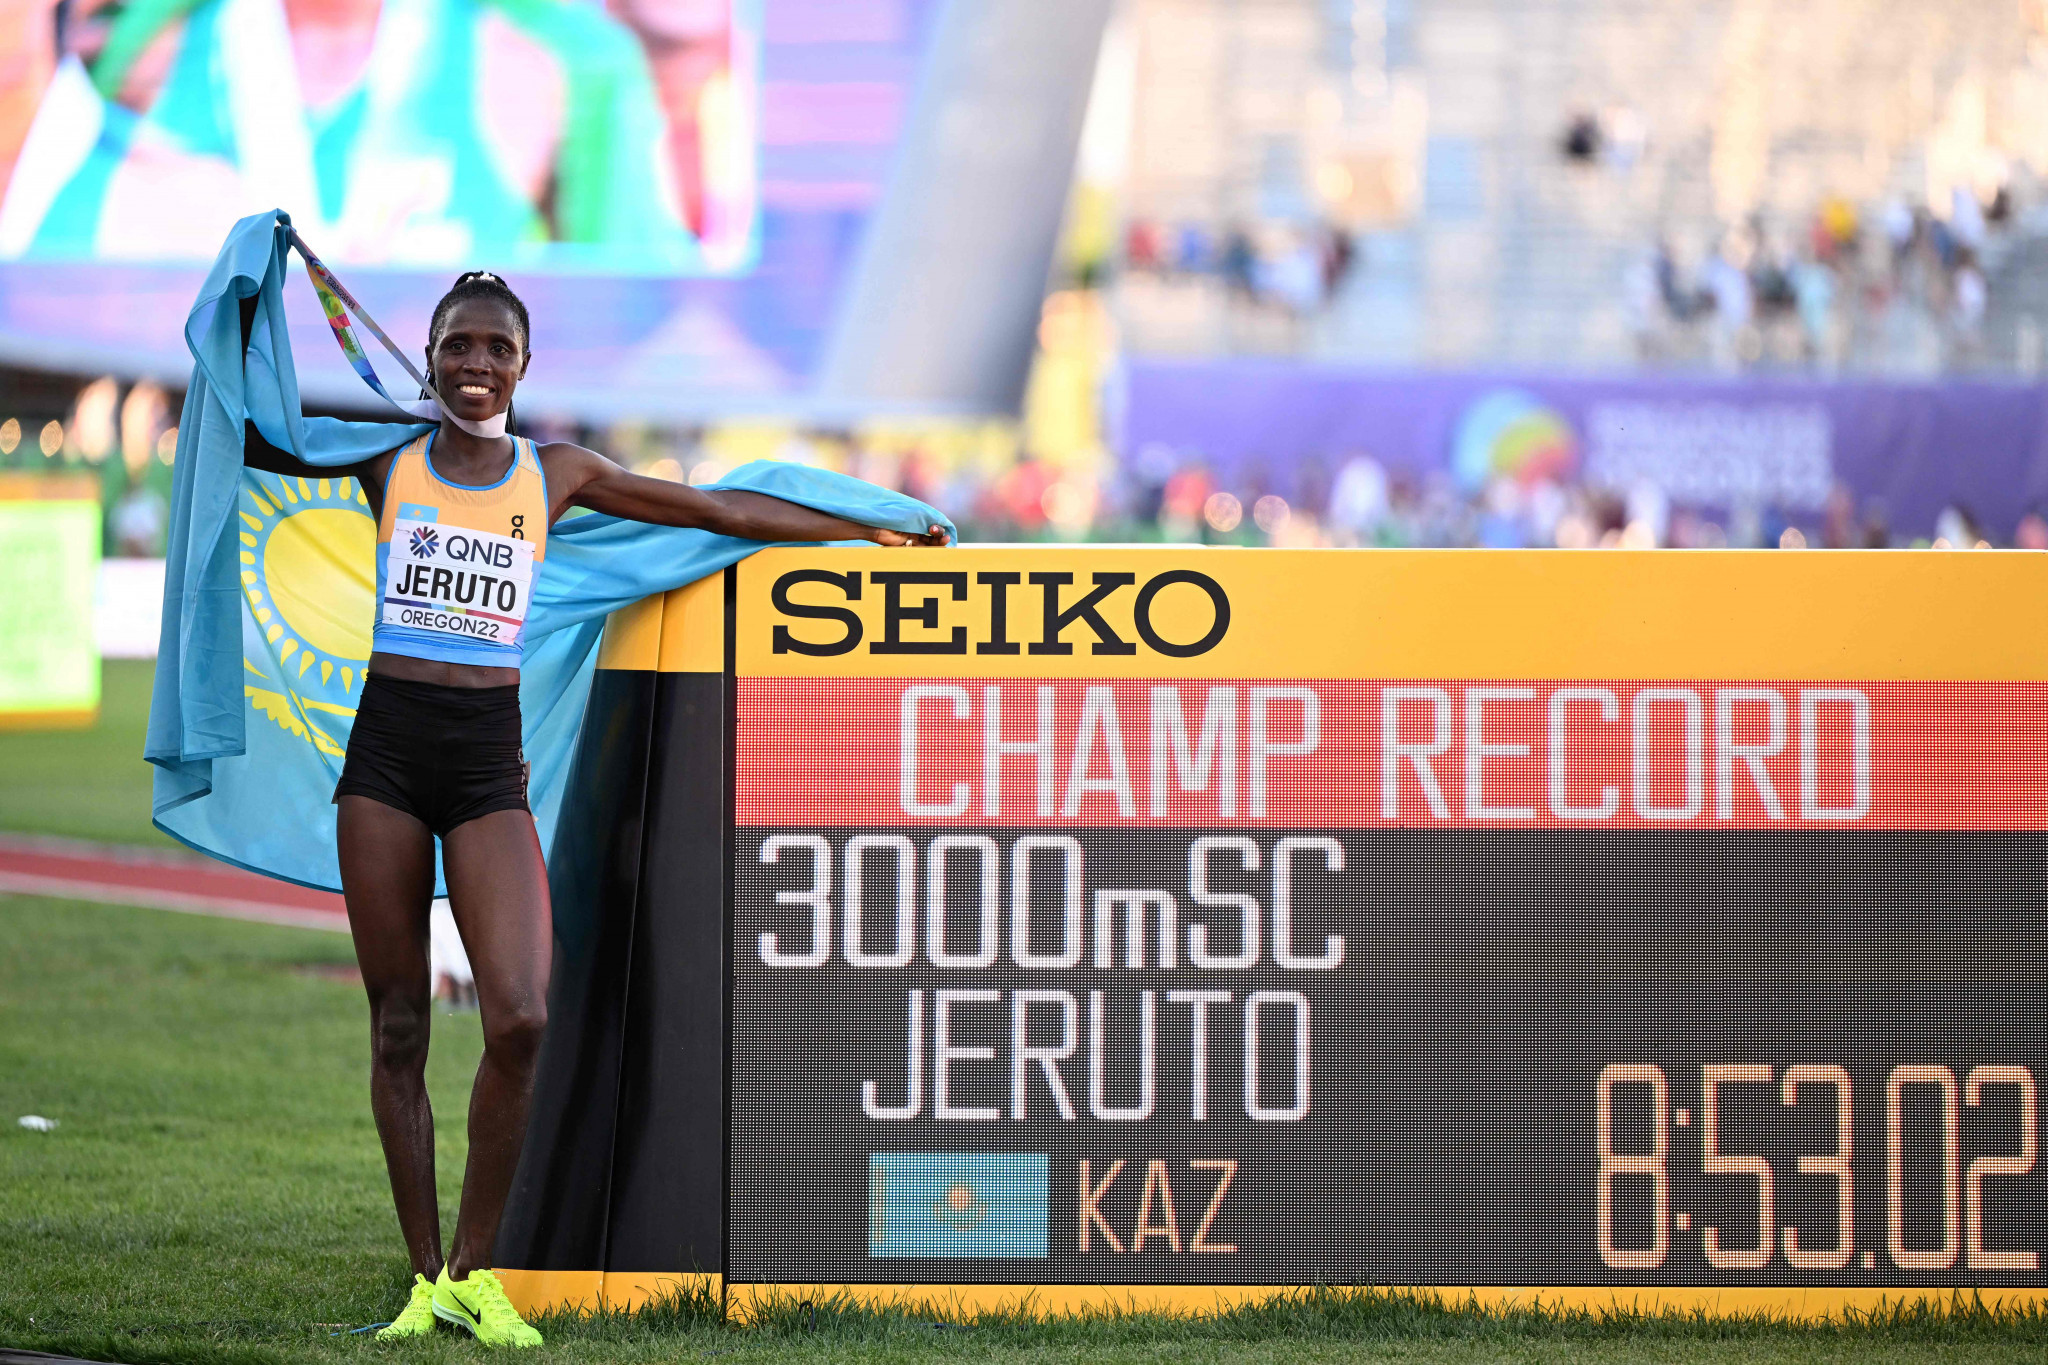 Kazakhstan's Jeruto breaks women’s 3,000m steeplechase World Championships record 